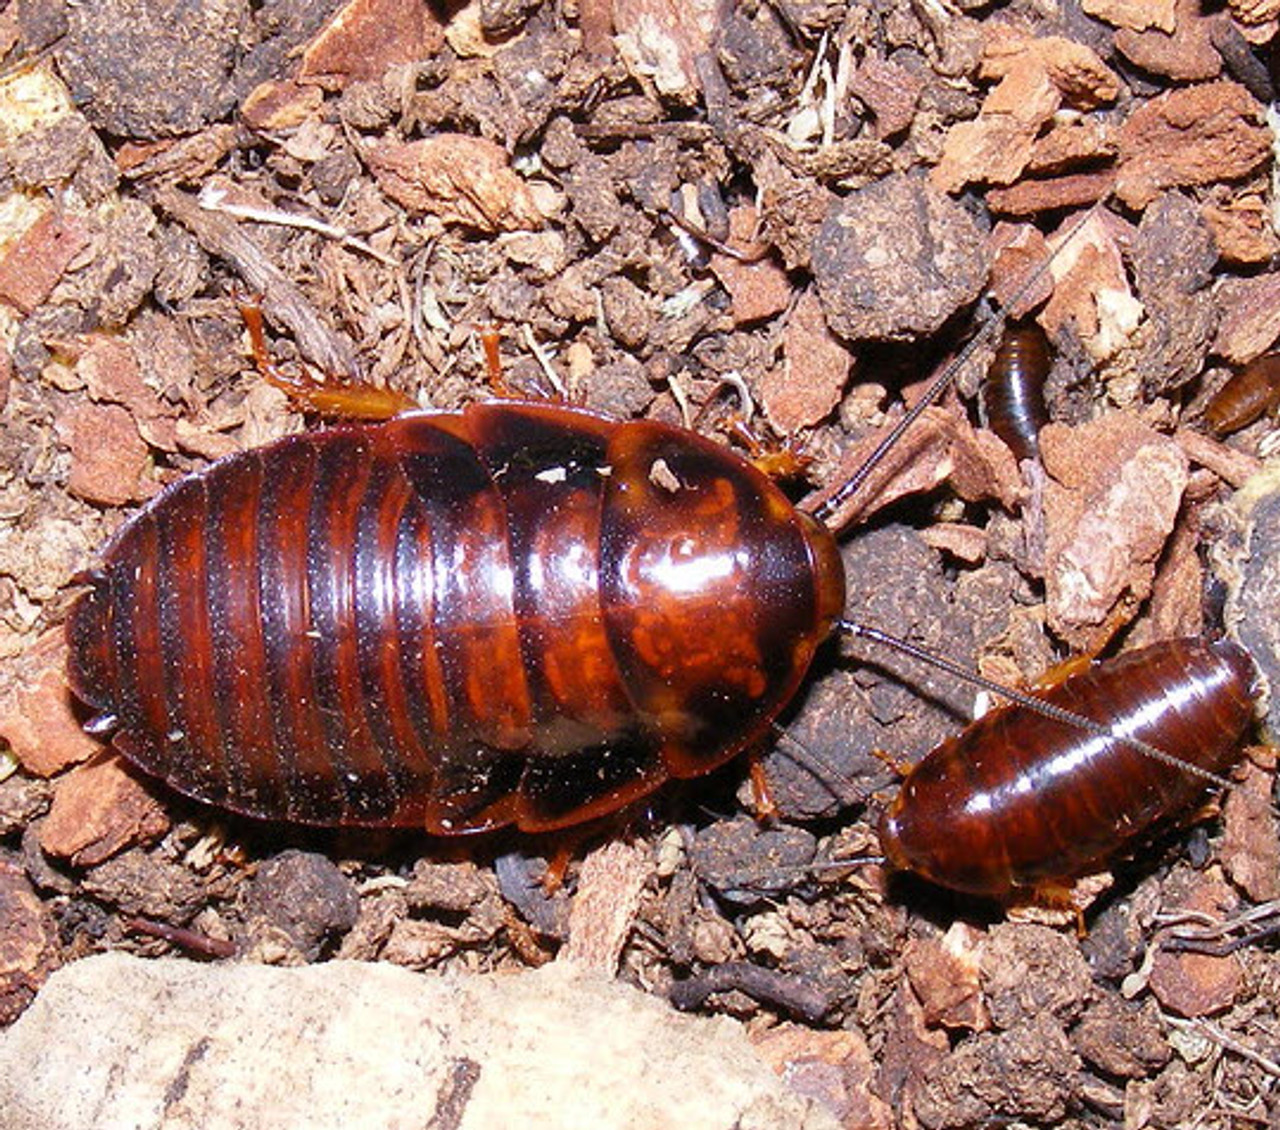 Sub Adult with small Orange Head roach